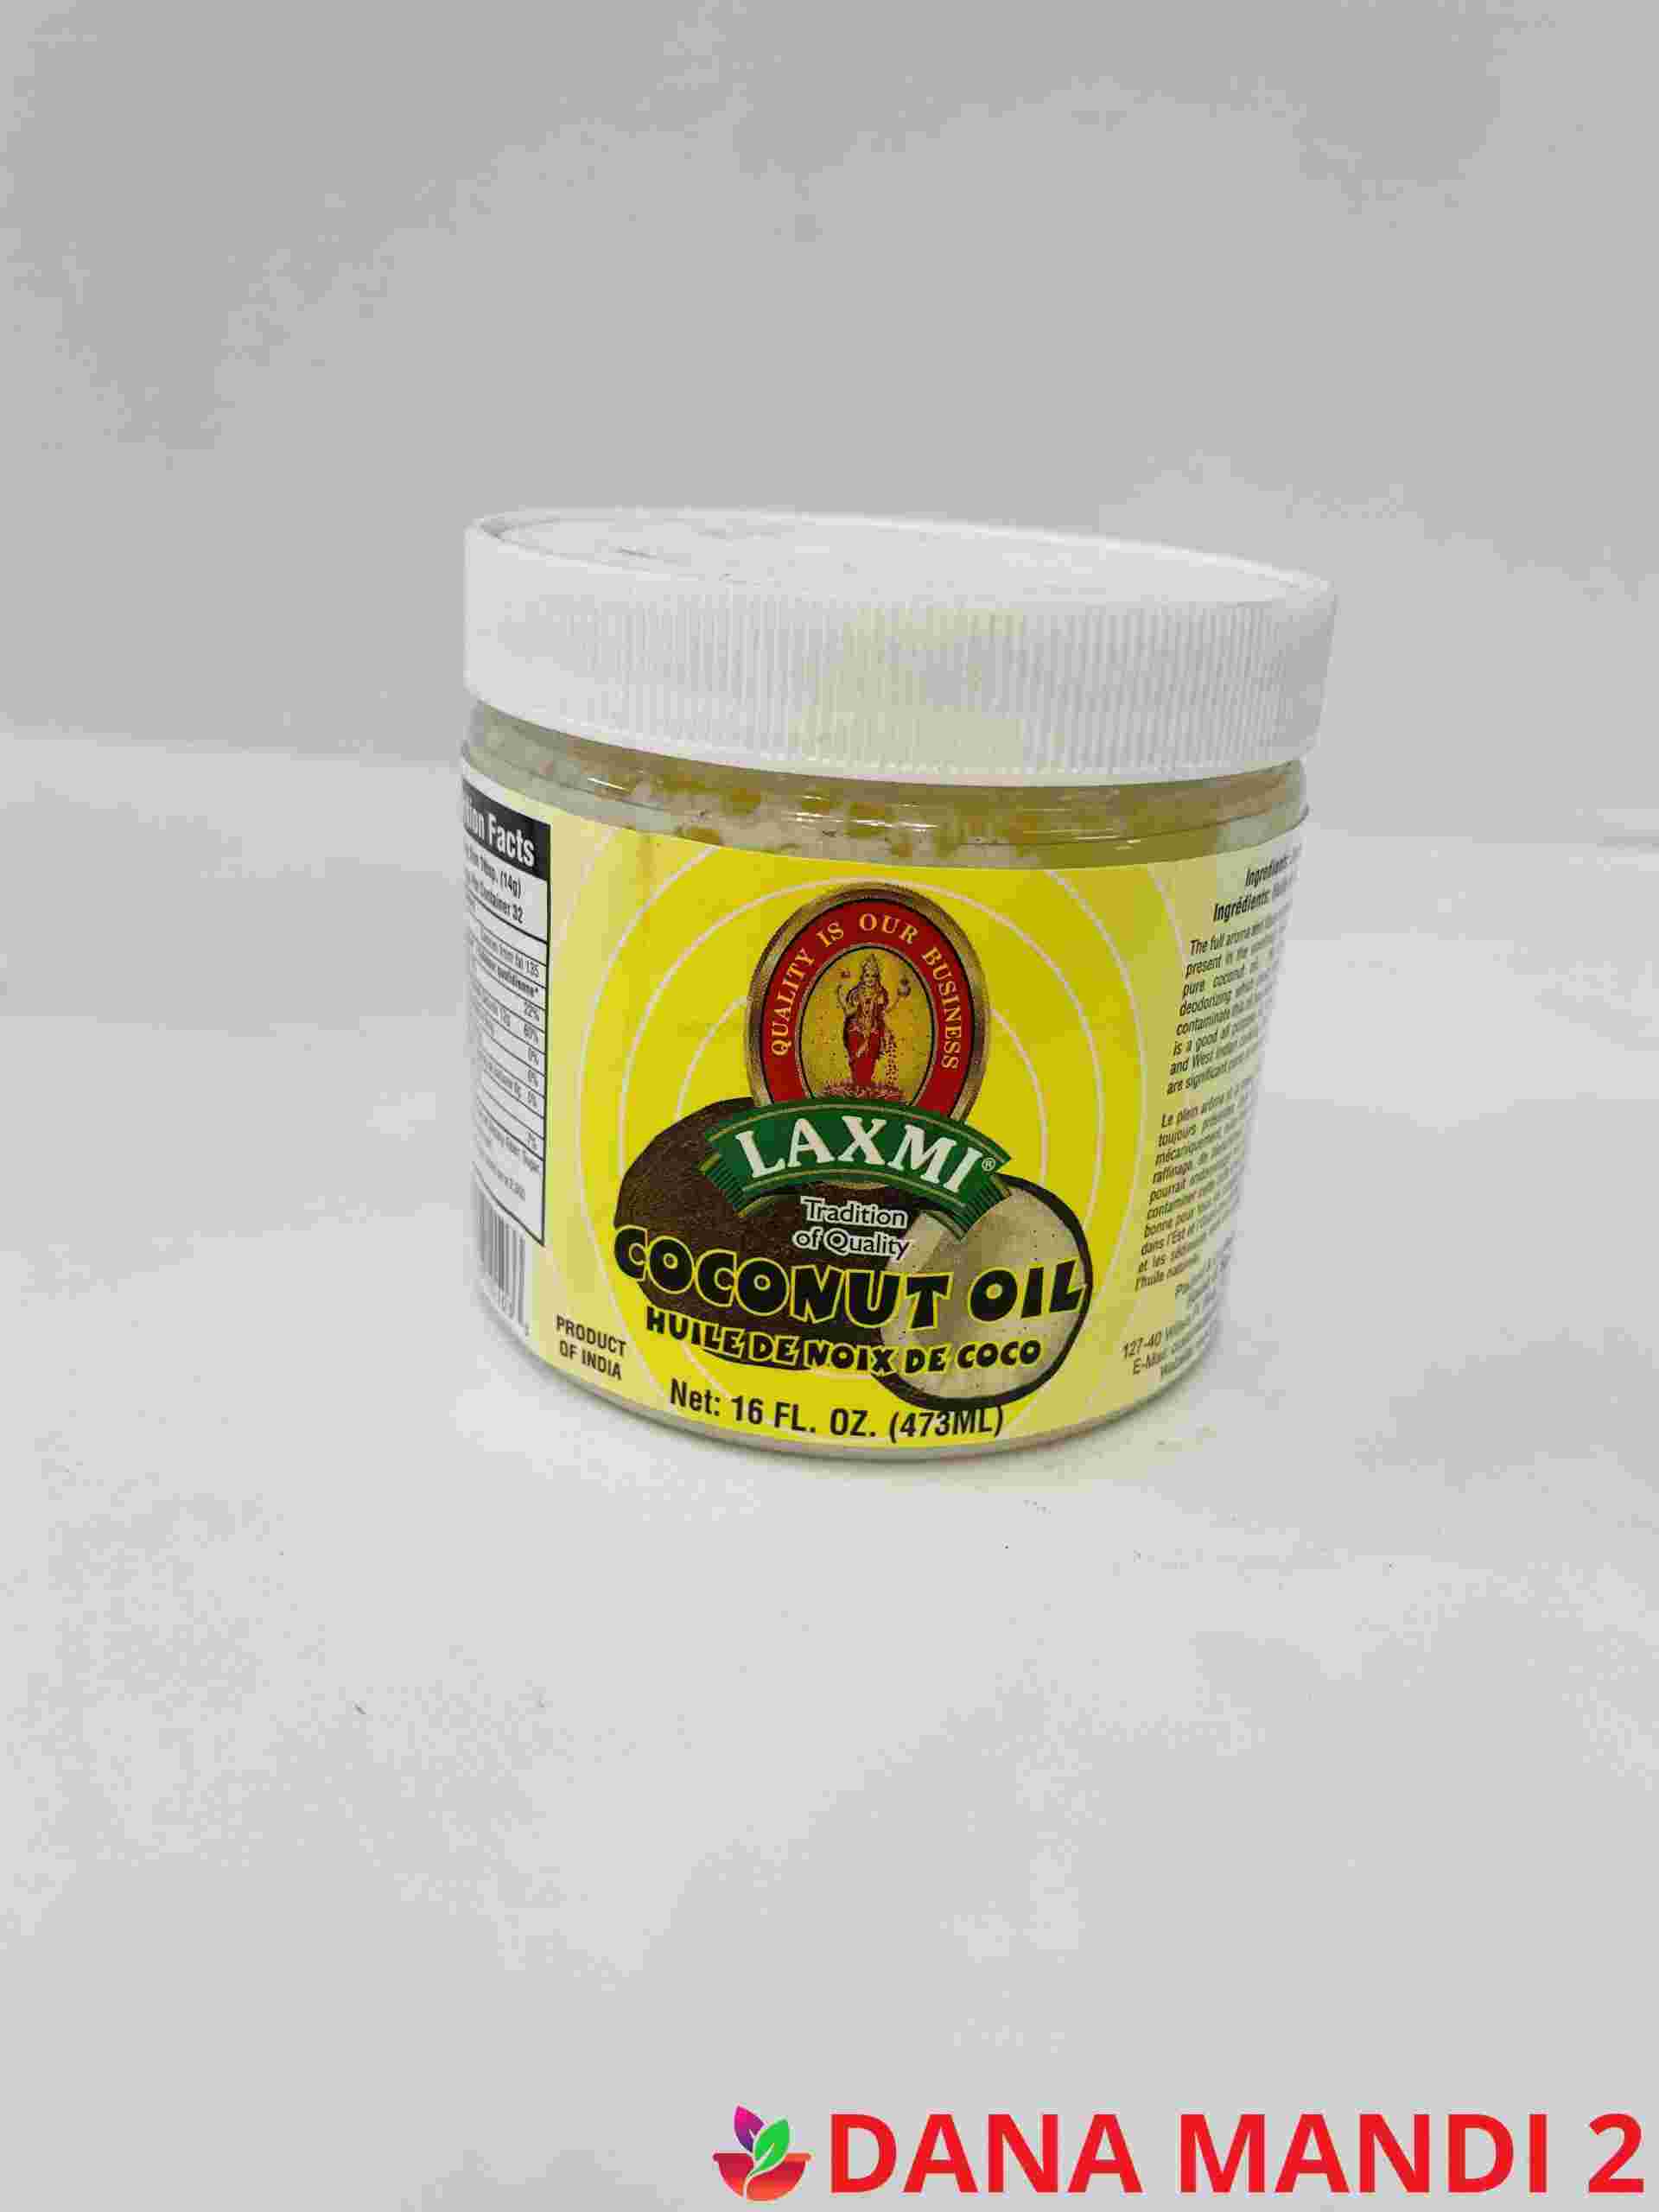 Laxmi Ghee Coconut Oil